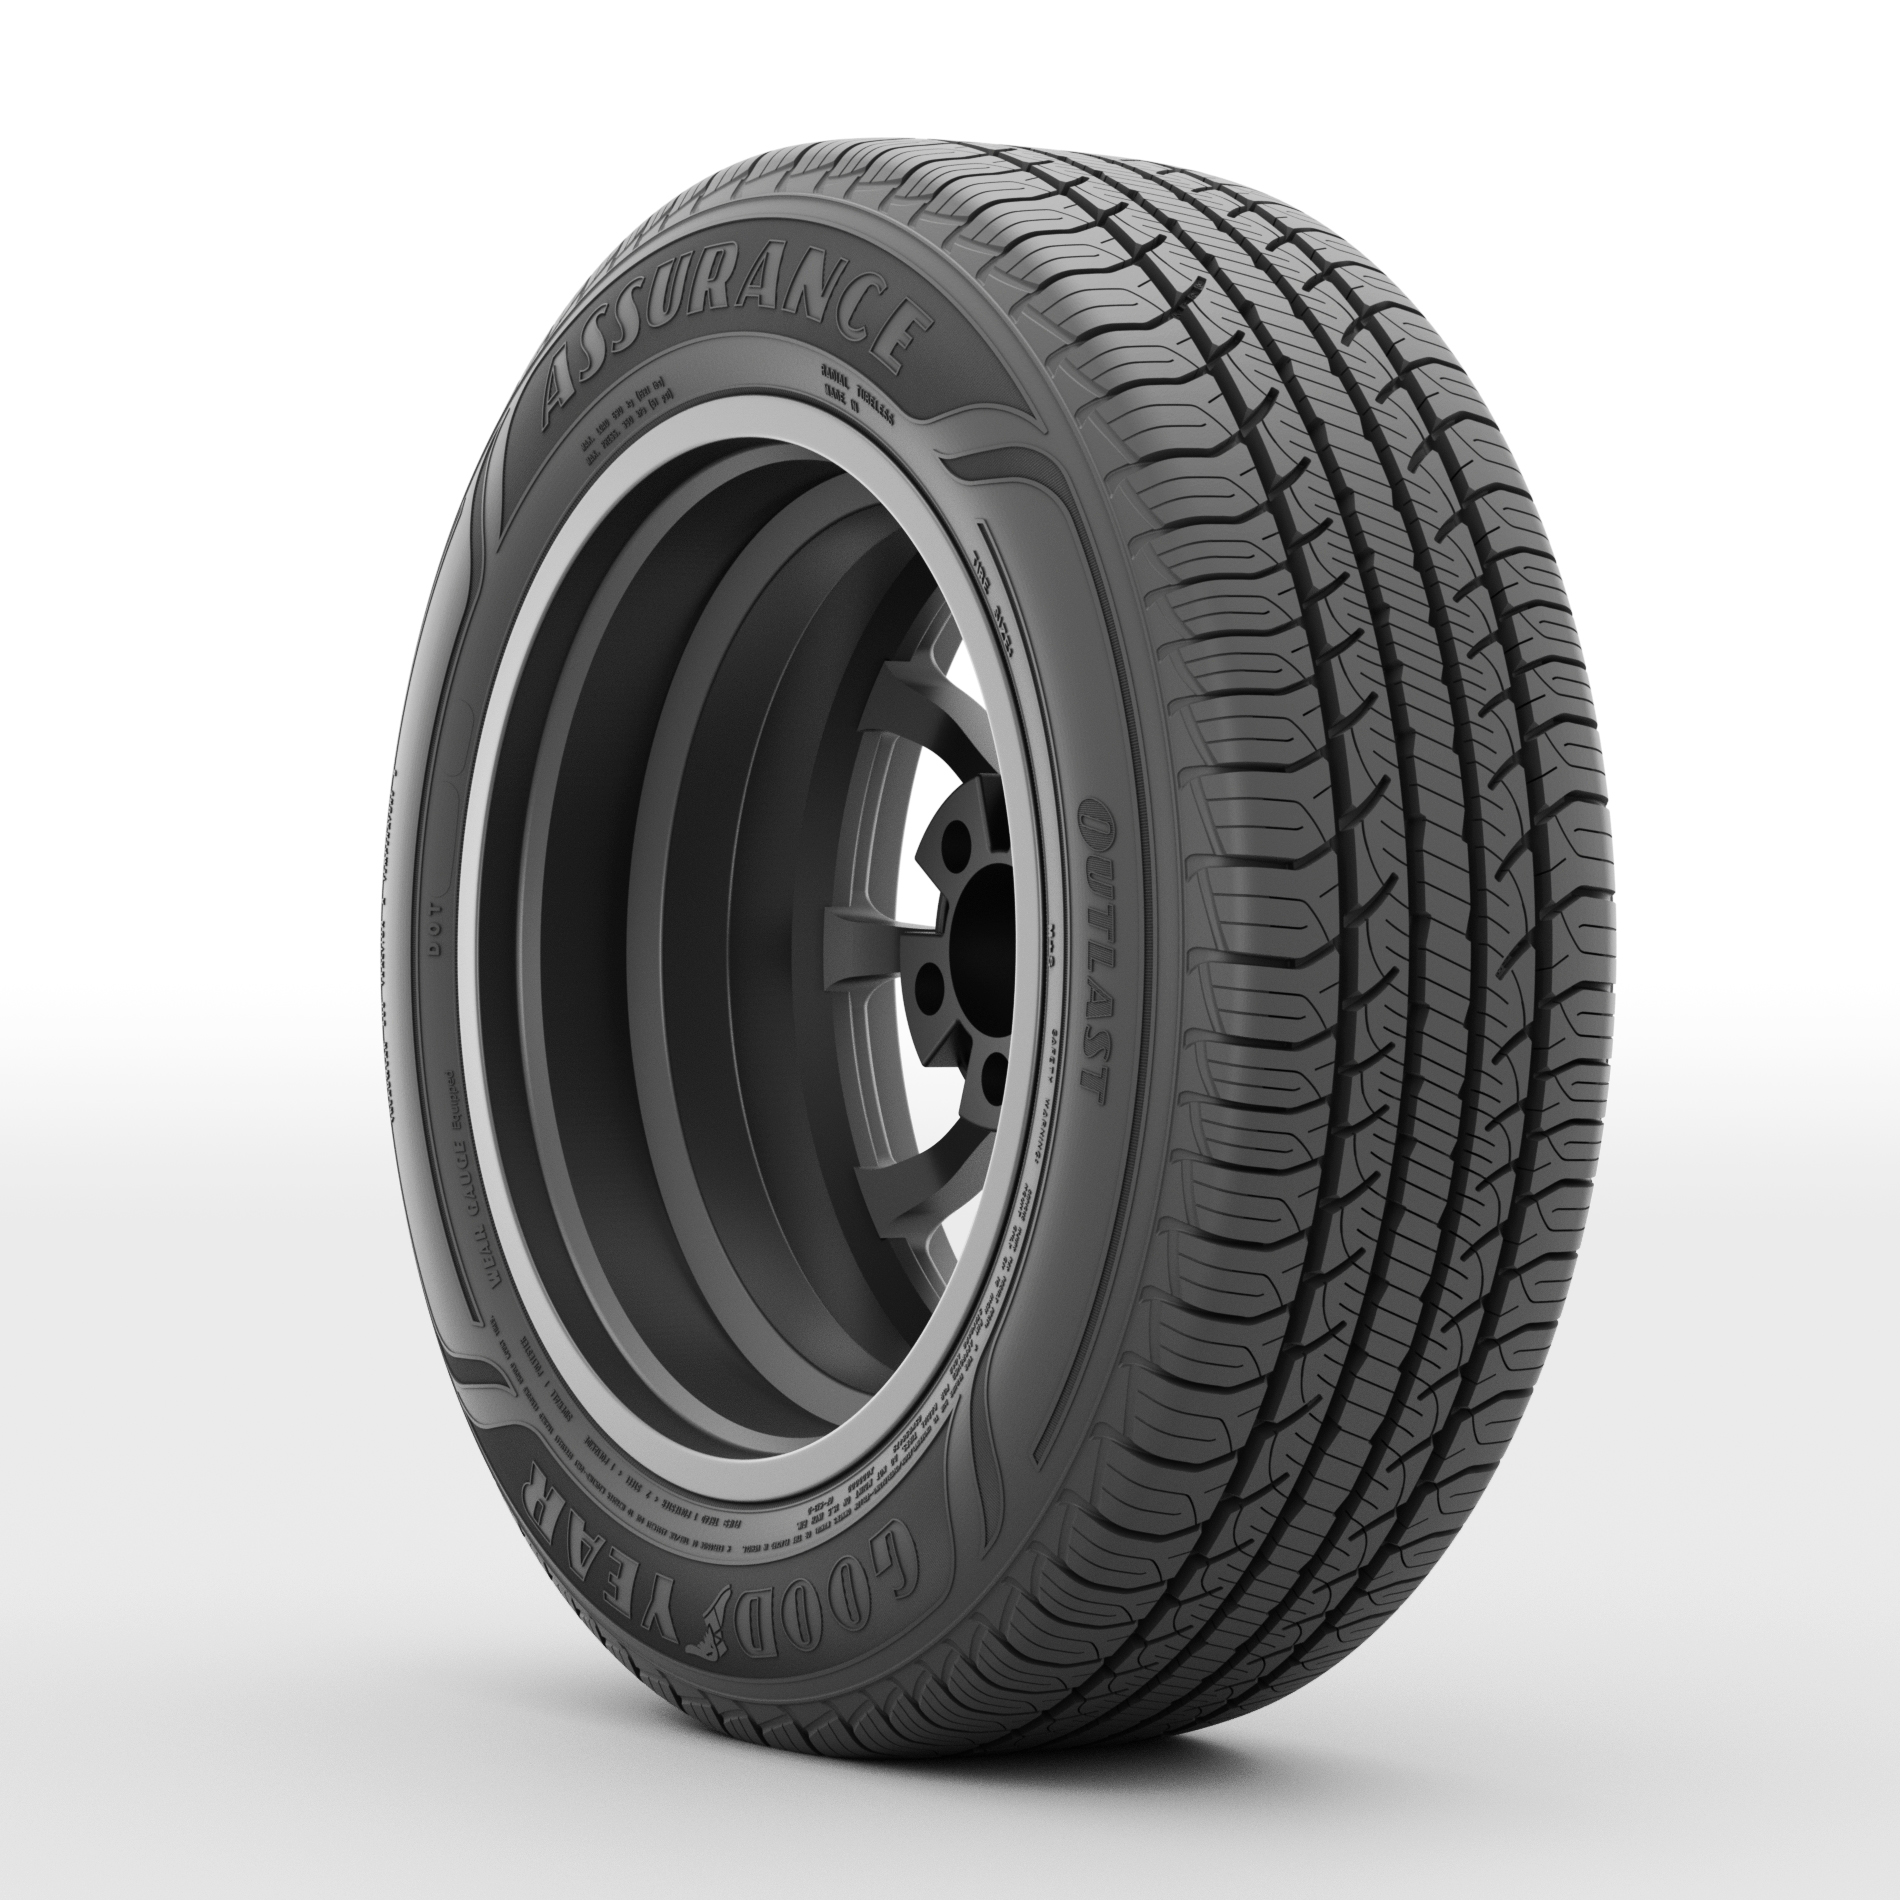 Goodyear Assurance Outlast 235/65R17 All-Season Tire 104H